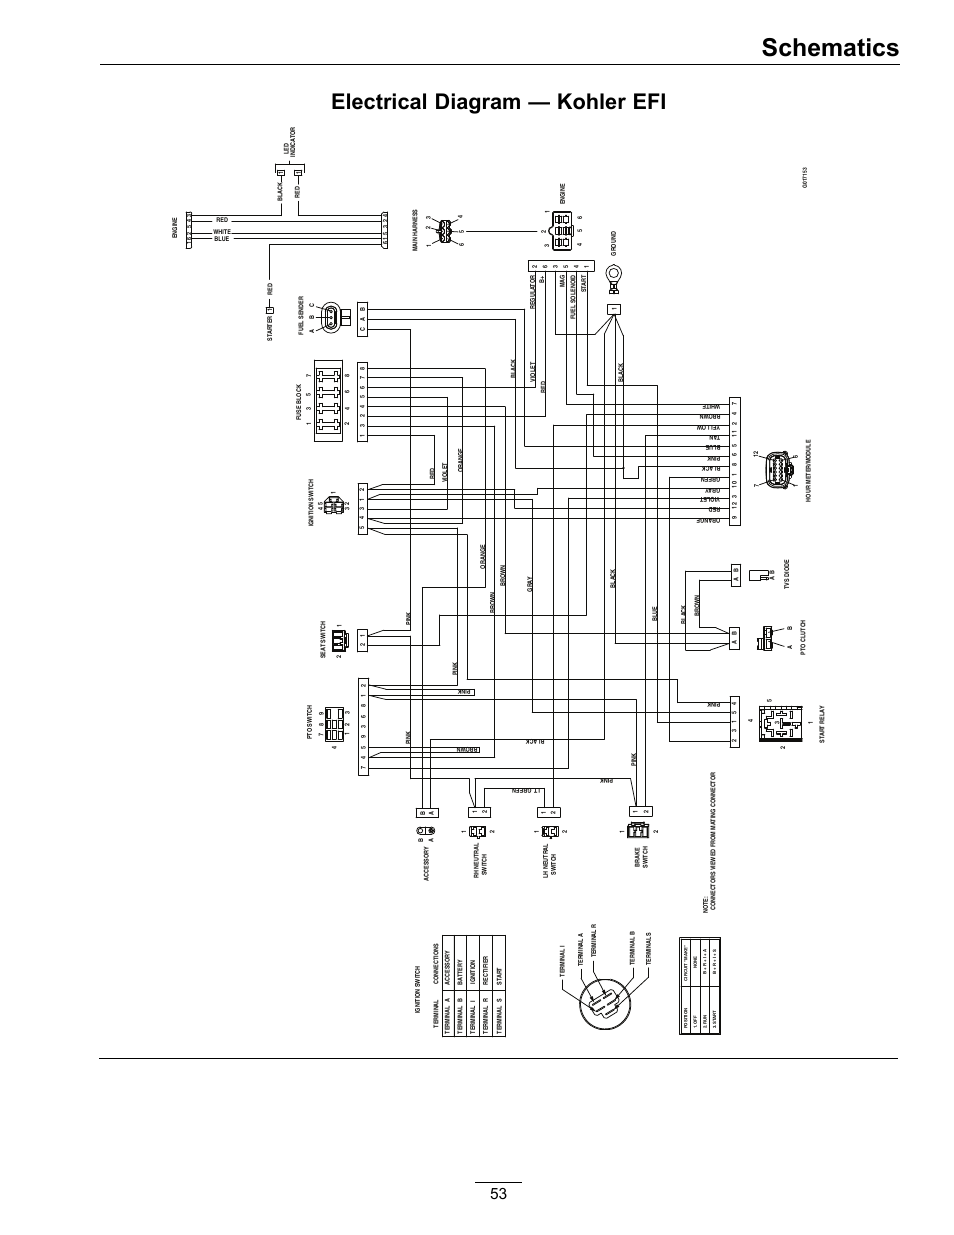 Schematic Kohler Engine Wiring Diagram from www.manualsdir.com